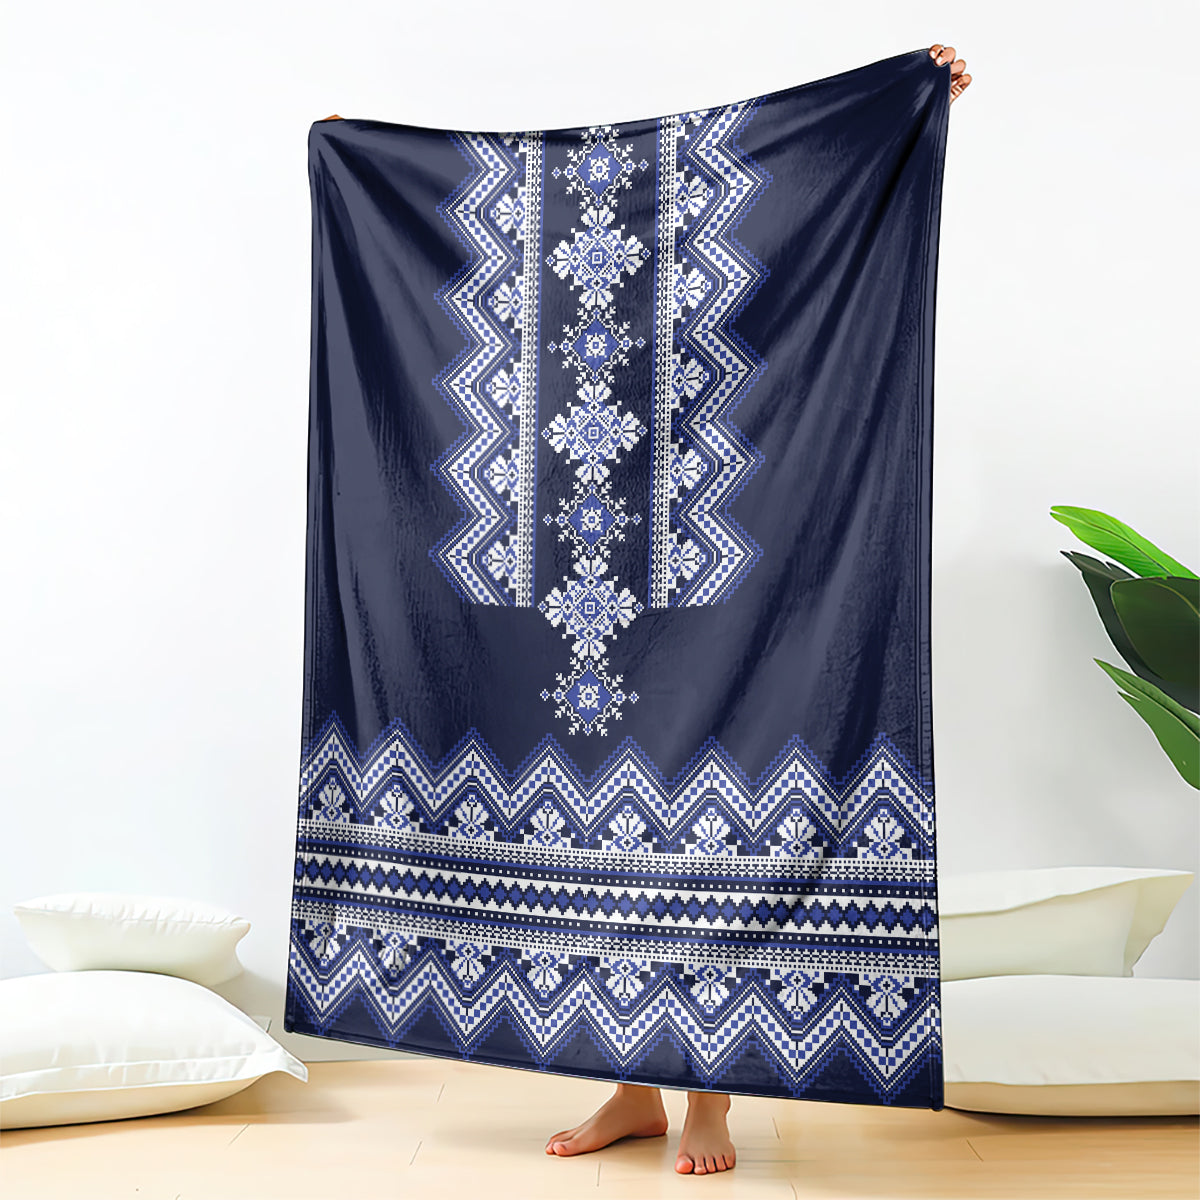 ukraine-folk-pattern-blanket-ukrainian-navy-blue-version